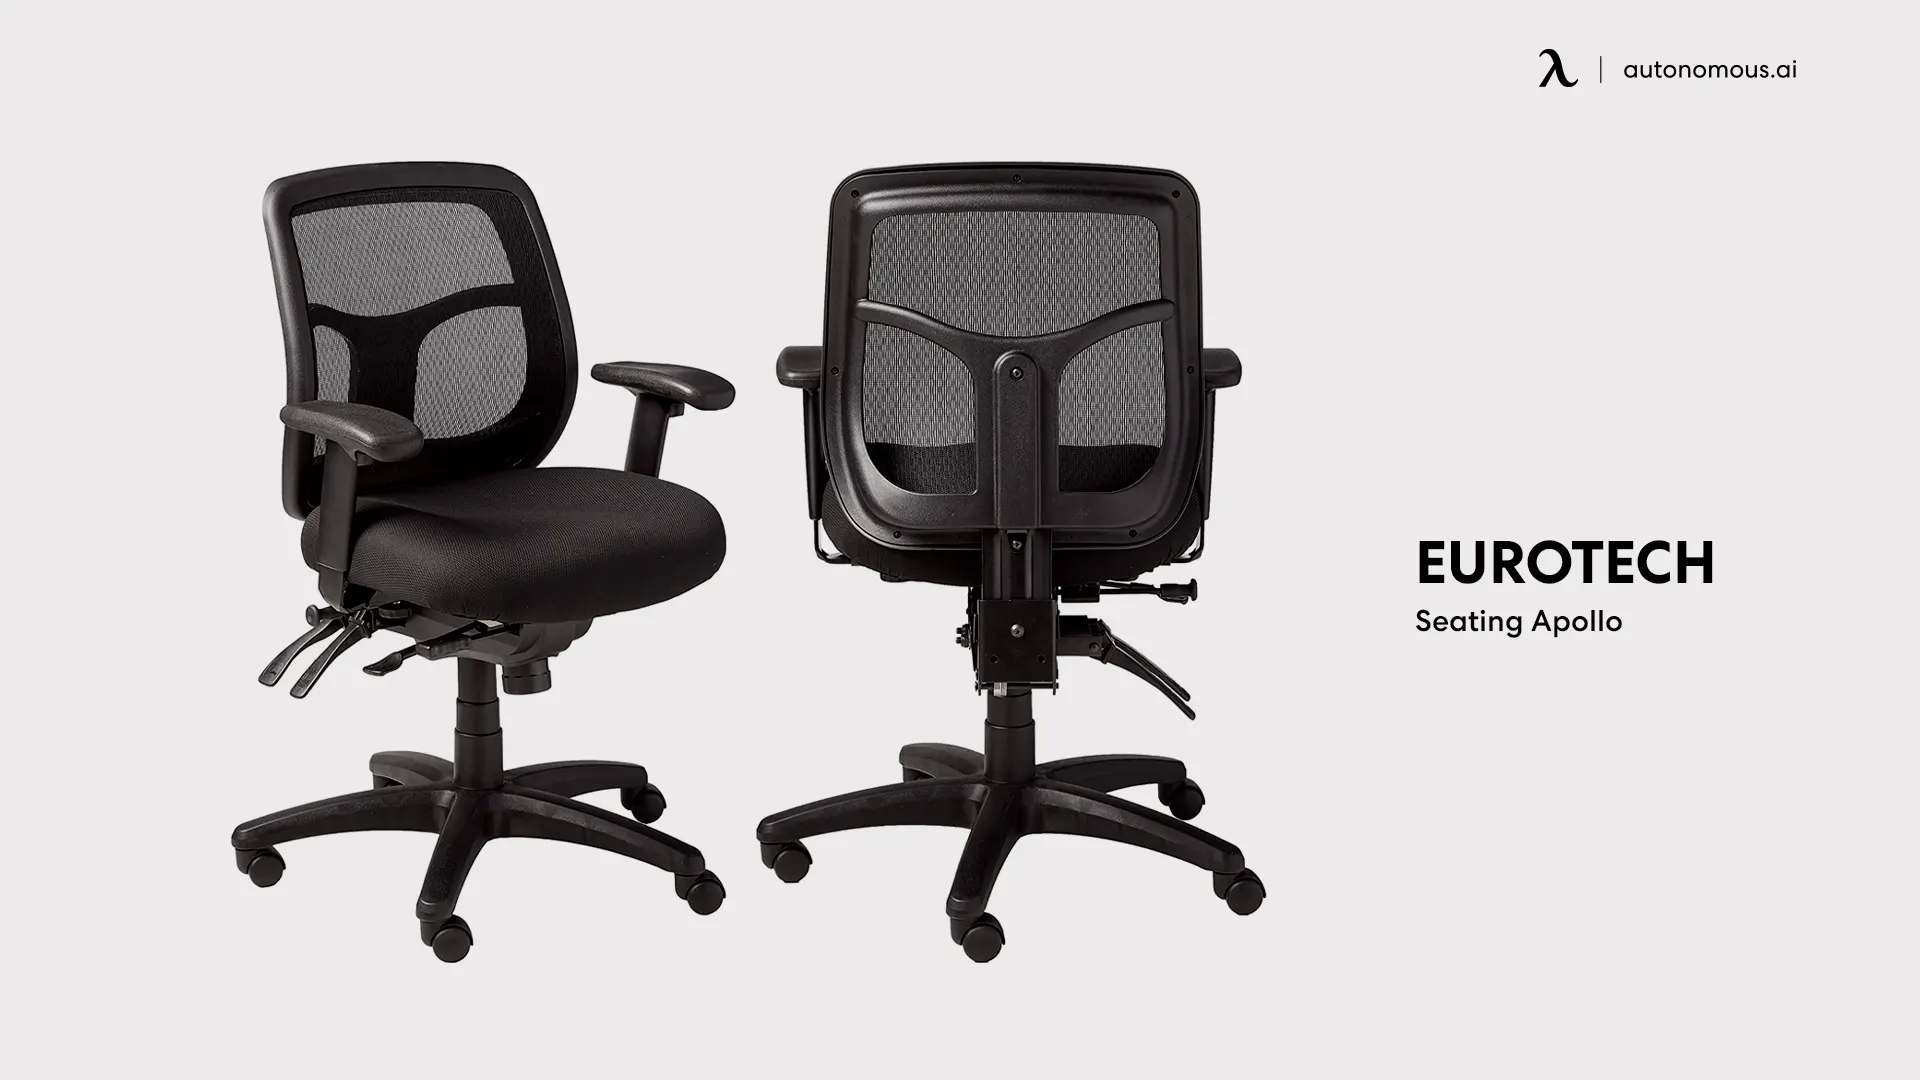 Eurotech Seating Apollo drafting stool